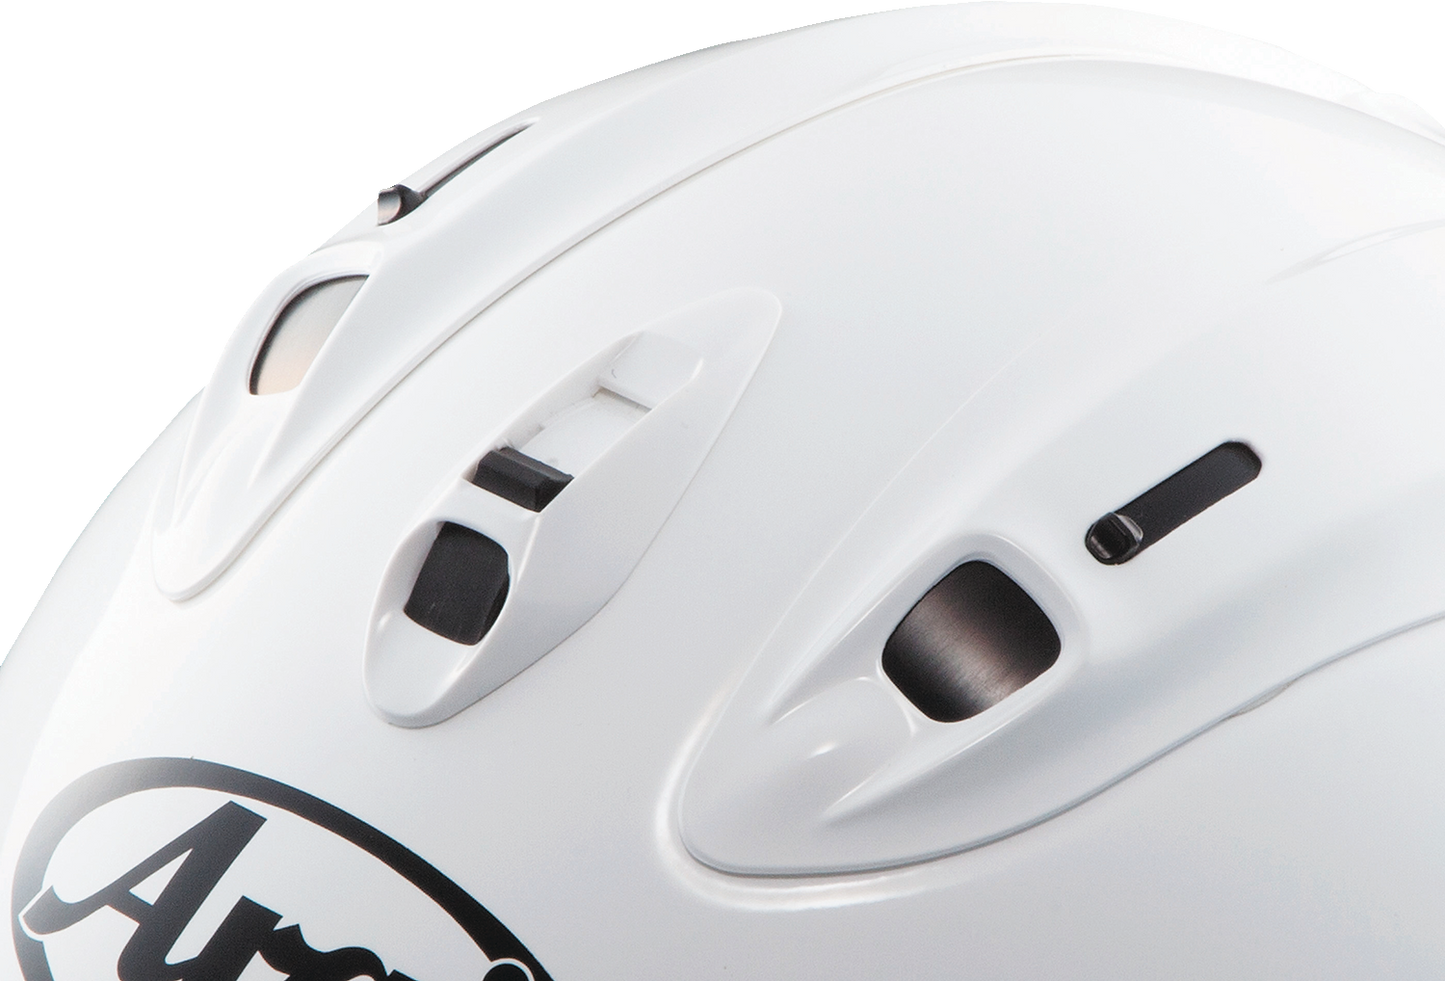 ARAI Corsair-X Helmet - White - Small 0101-15932